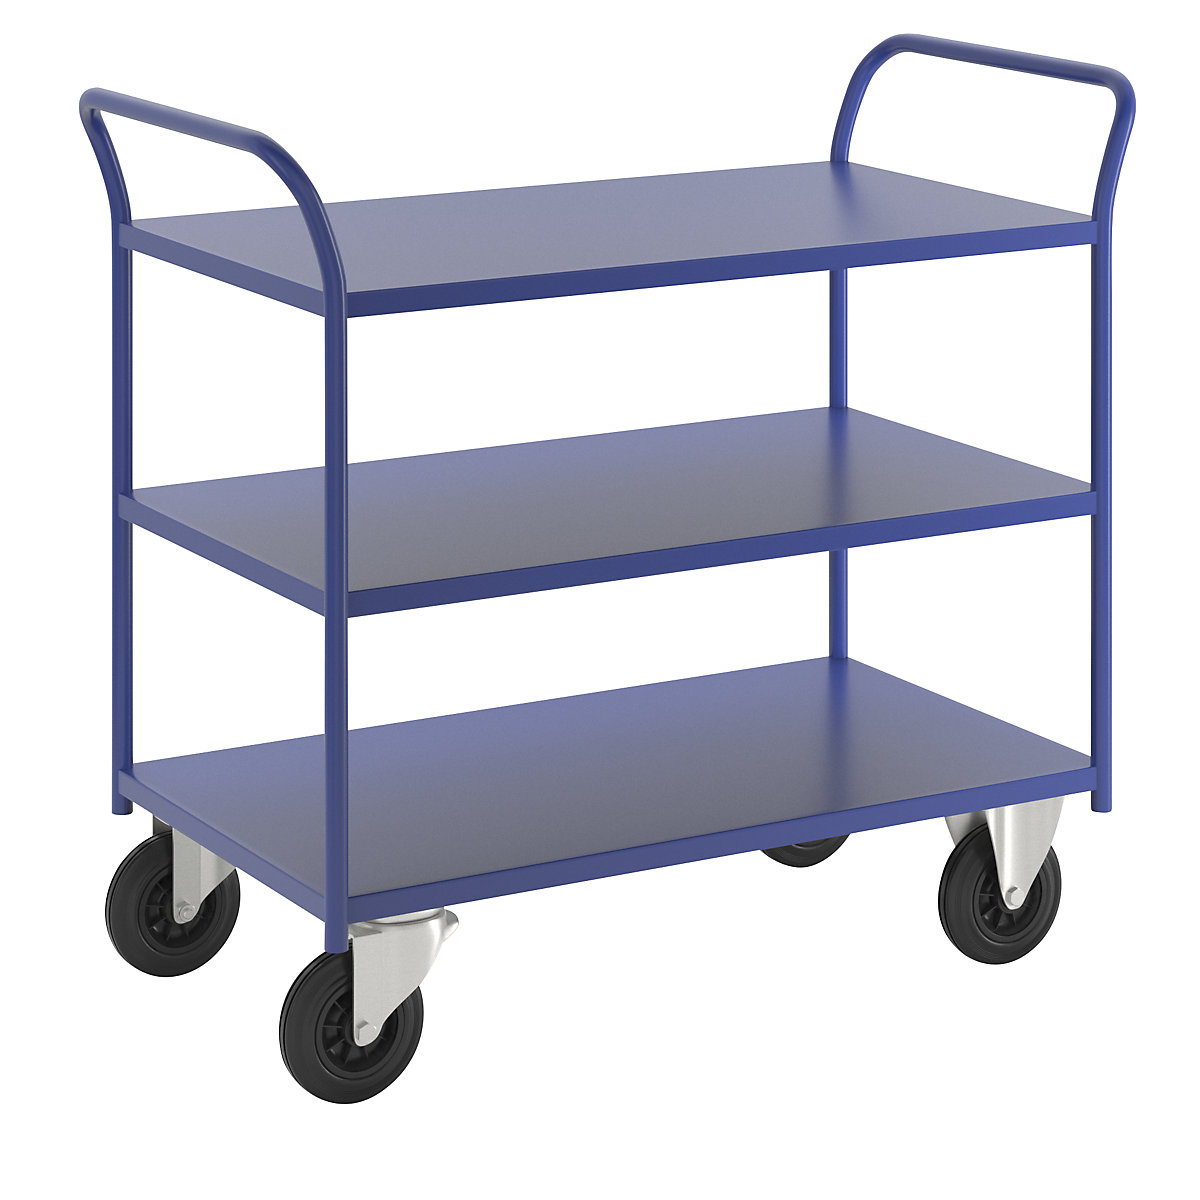 KM41 table trolley – Kongamek, 3 shelves, LxWxH 1070 x 550 x 975 mm, blue, 2 swivel castors and 2 fixed castors-8